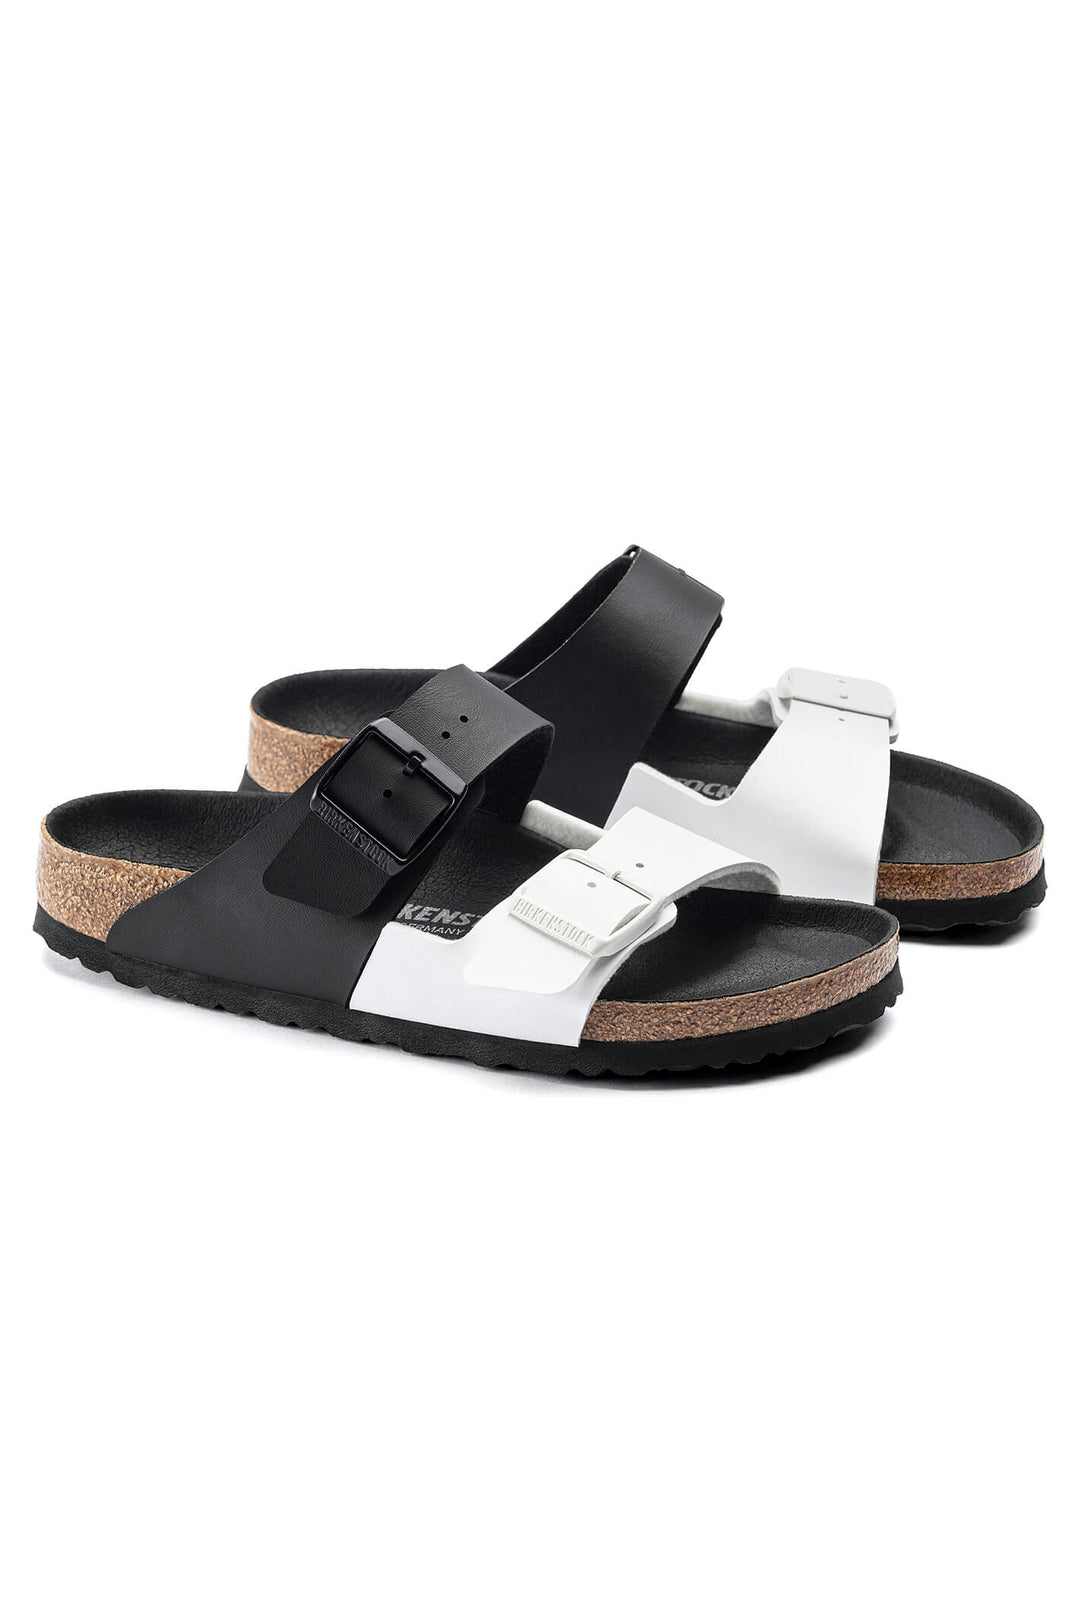 Birkenstock Arizona Split 1019712 Black White Narrow Fit Sandal - Shirley Allum Boutique